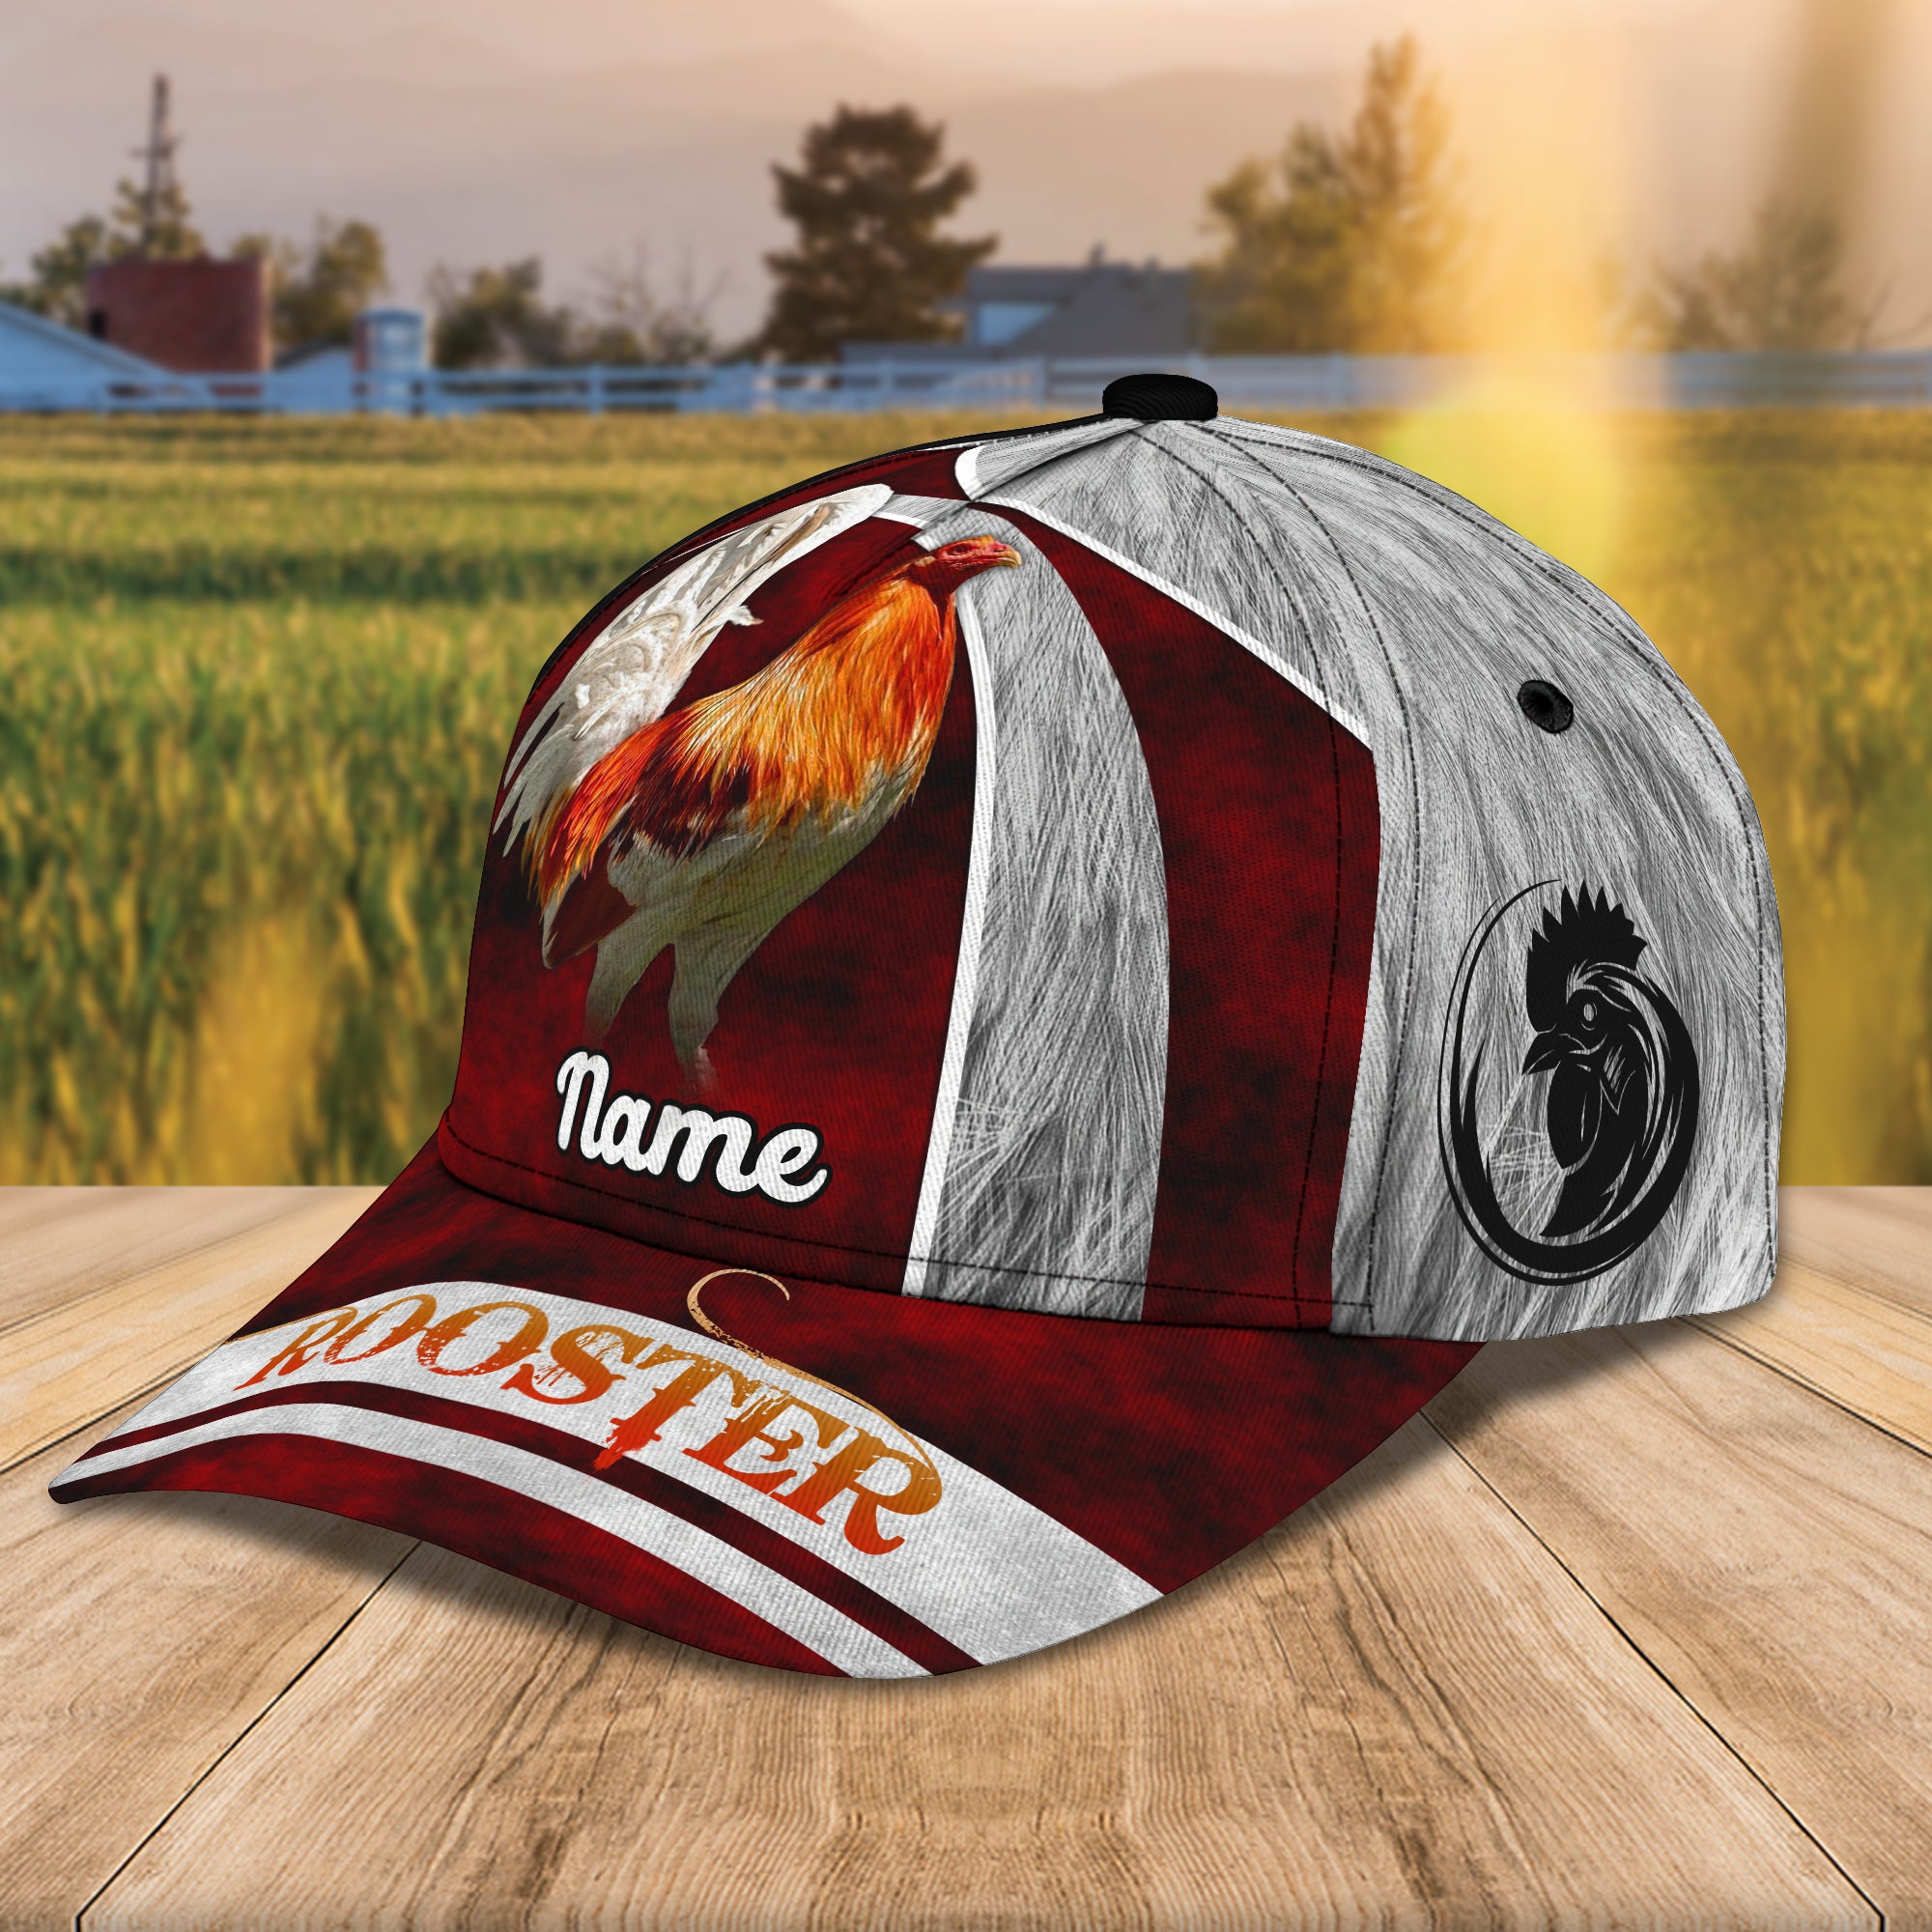 Rooster 04 - Personalize Name Cap  - Loop - Ntp-239